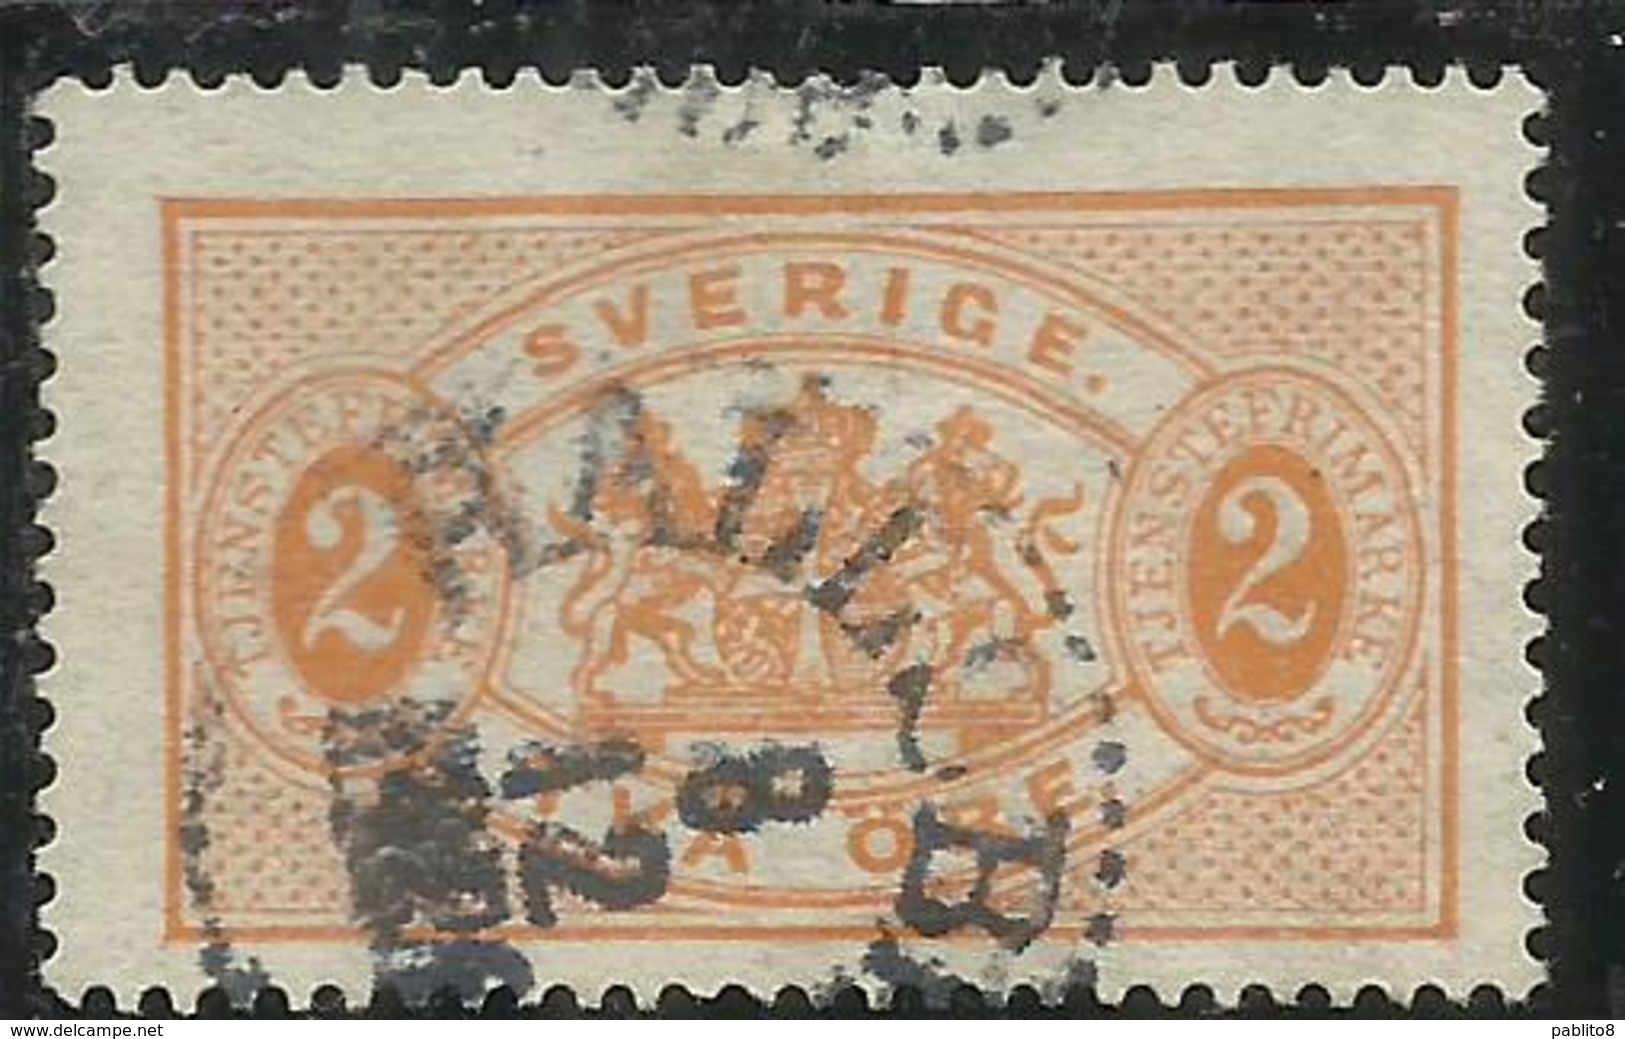 SWEDEN SVERIGE SVEZIA SUEDE 1881 1895 OFFICIAL STAMPS ORE 2o USATO USED OBLITERE' - Steuermarken